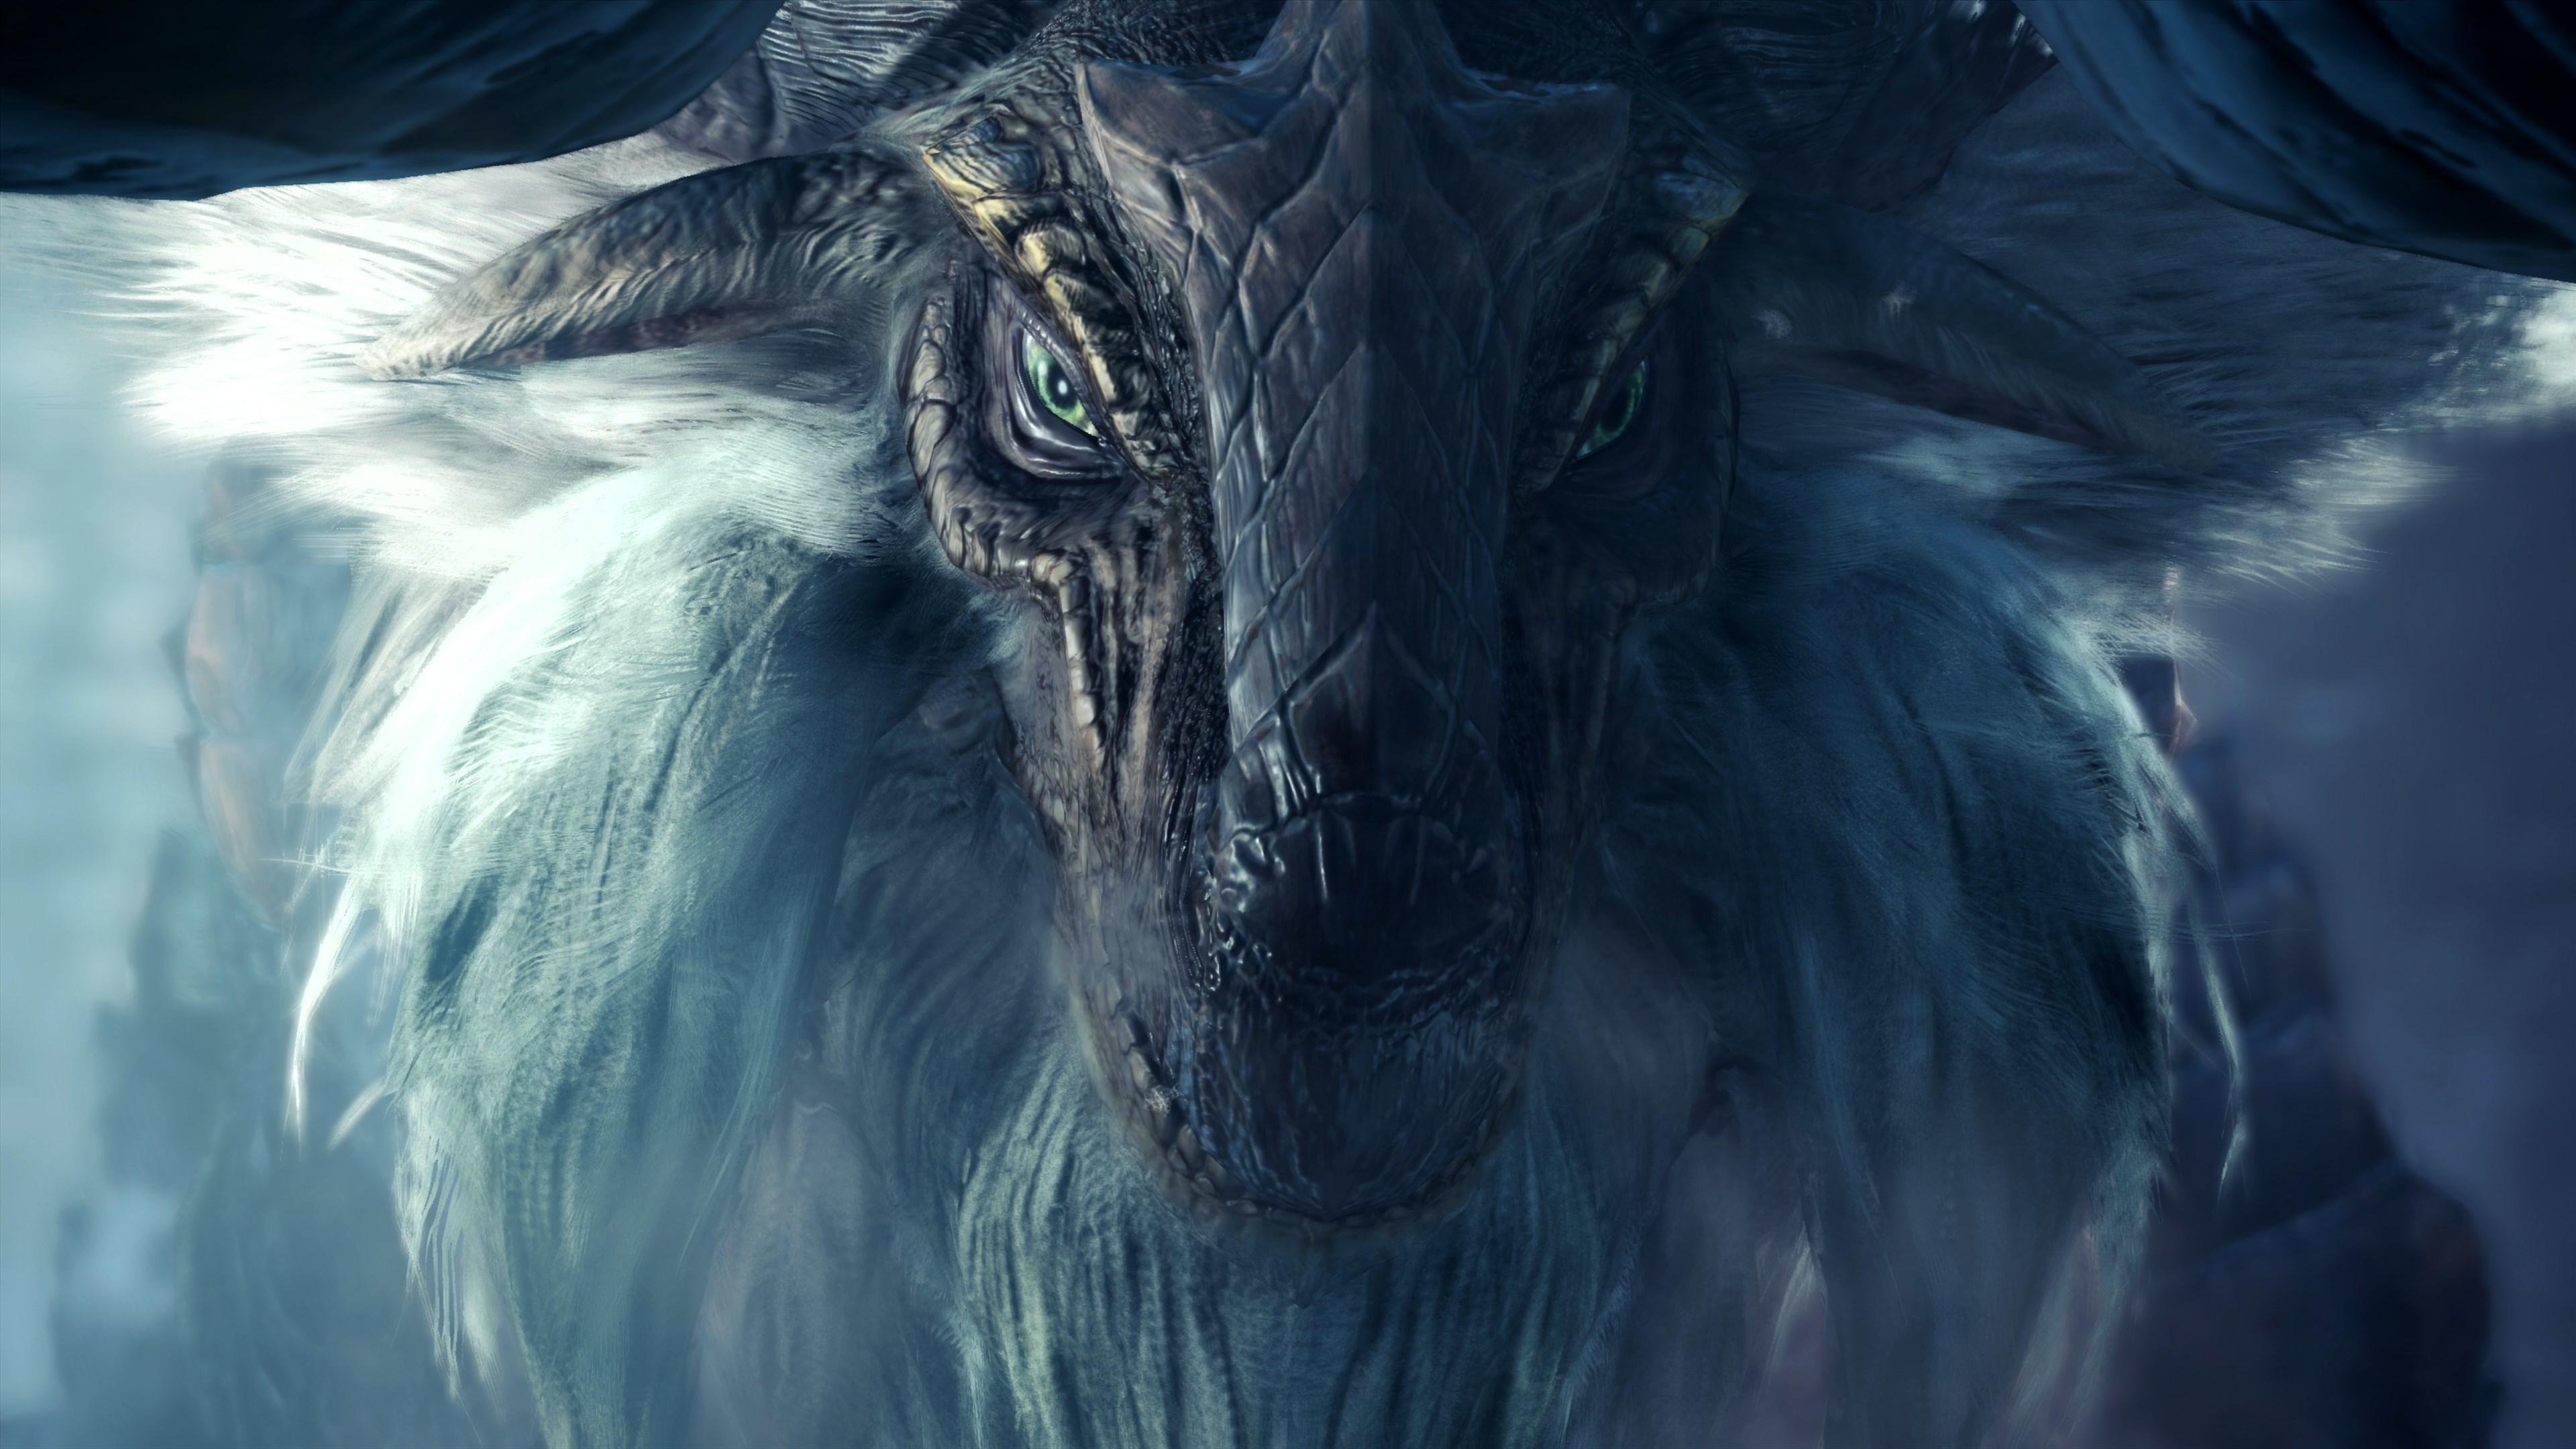 monster live wallpaper,dragon,fictional character,mythical creature,cg artwork,mythology